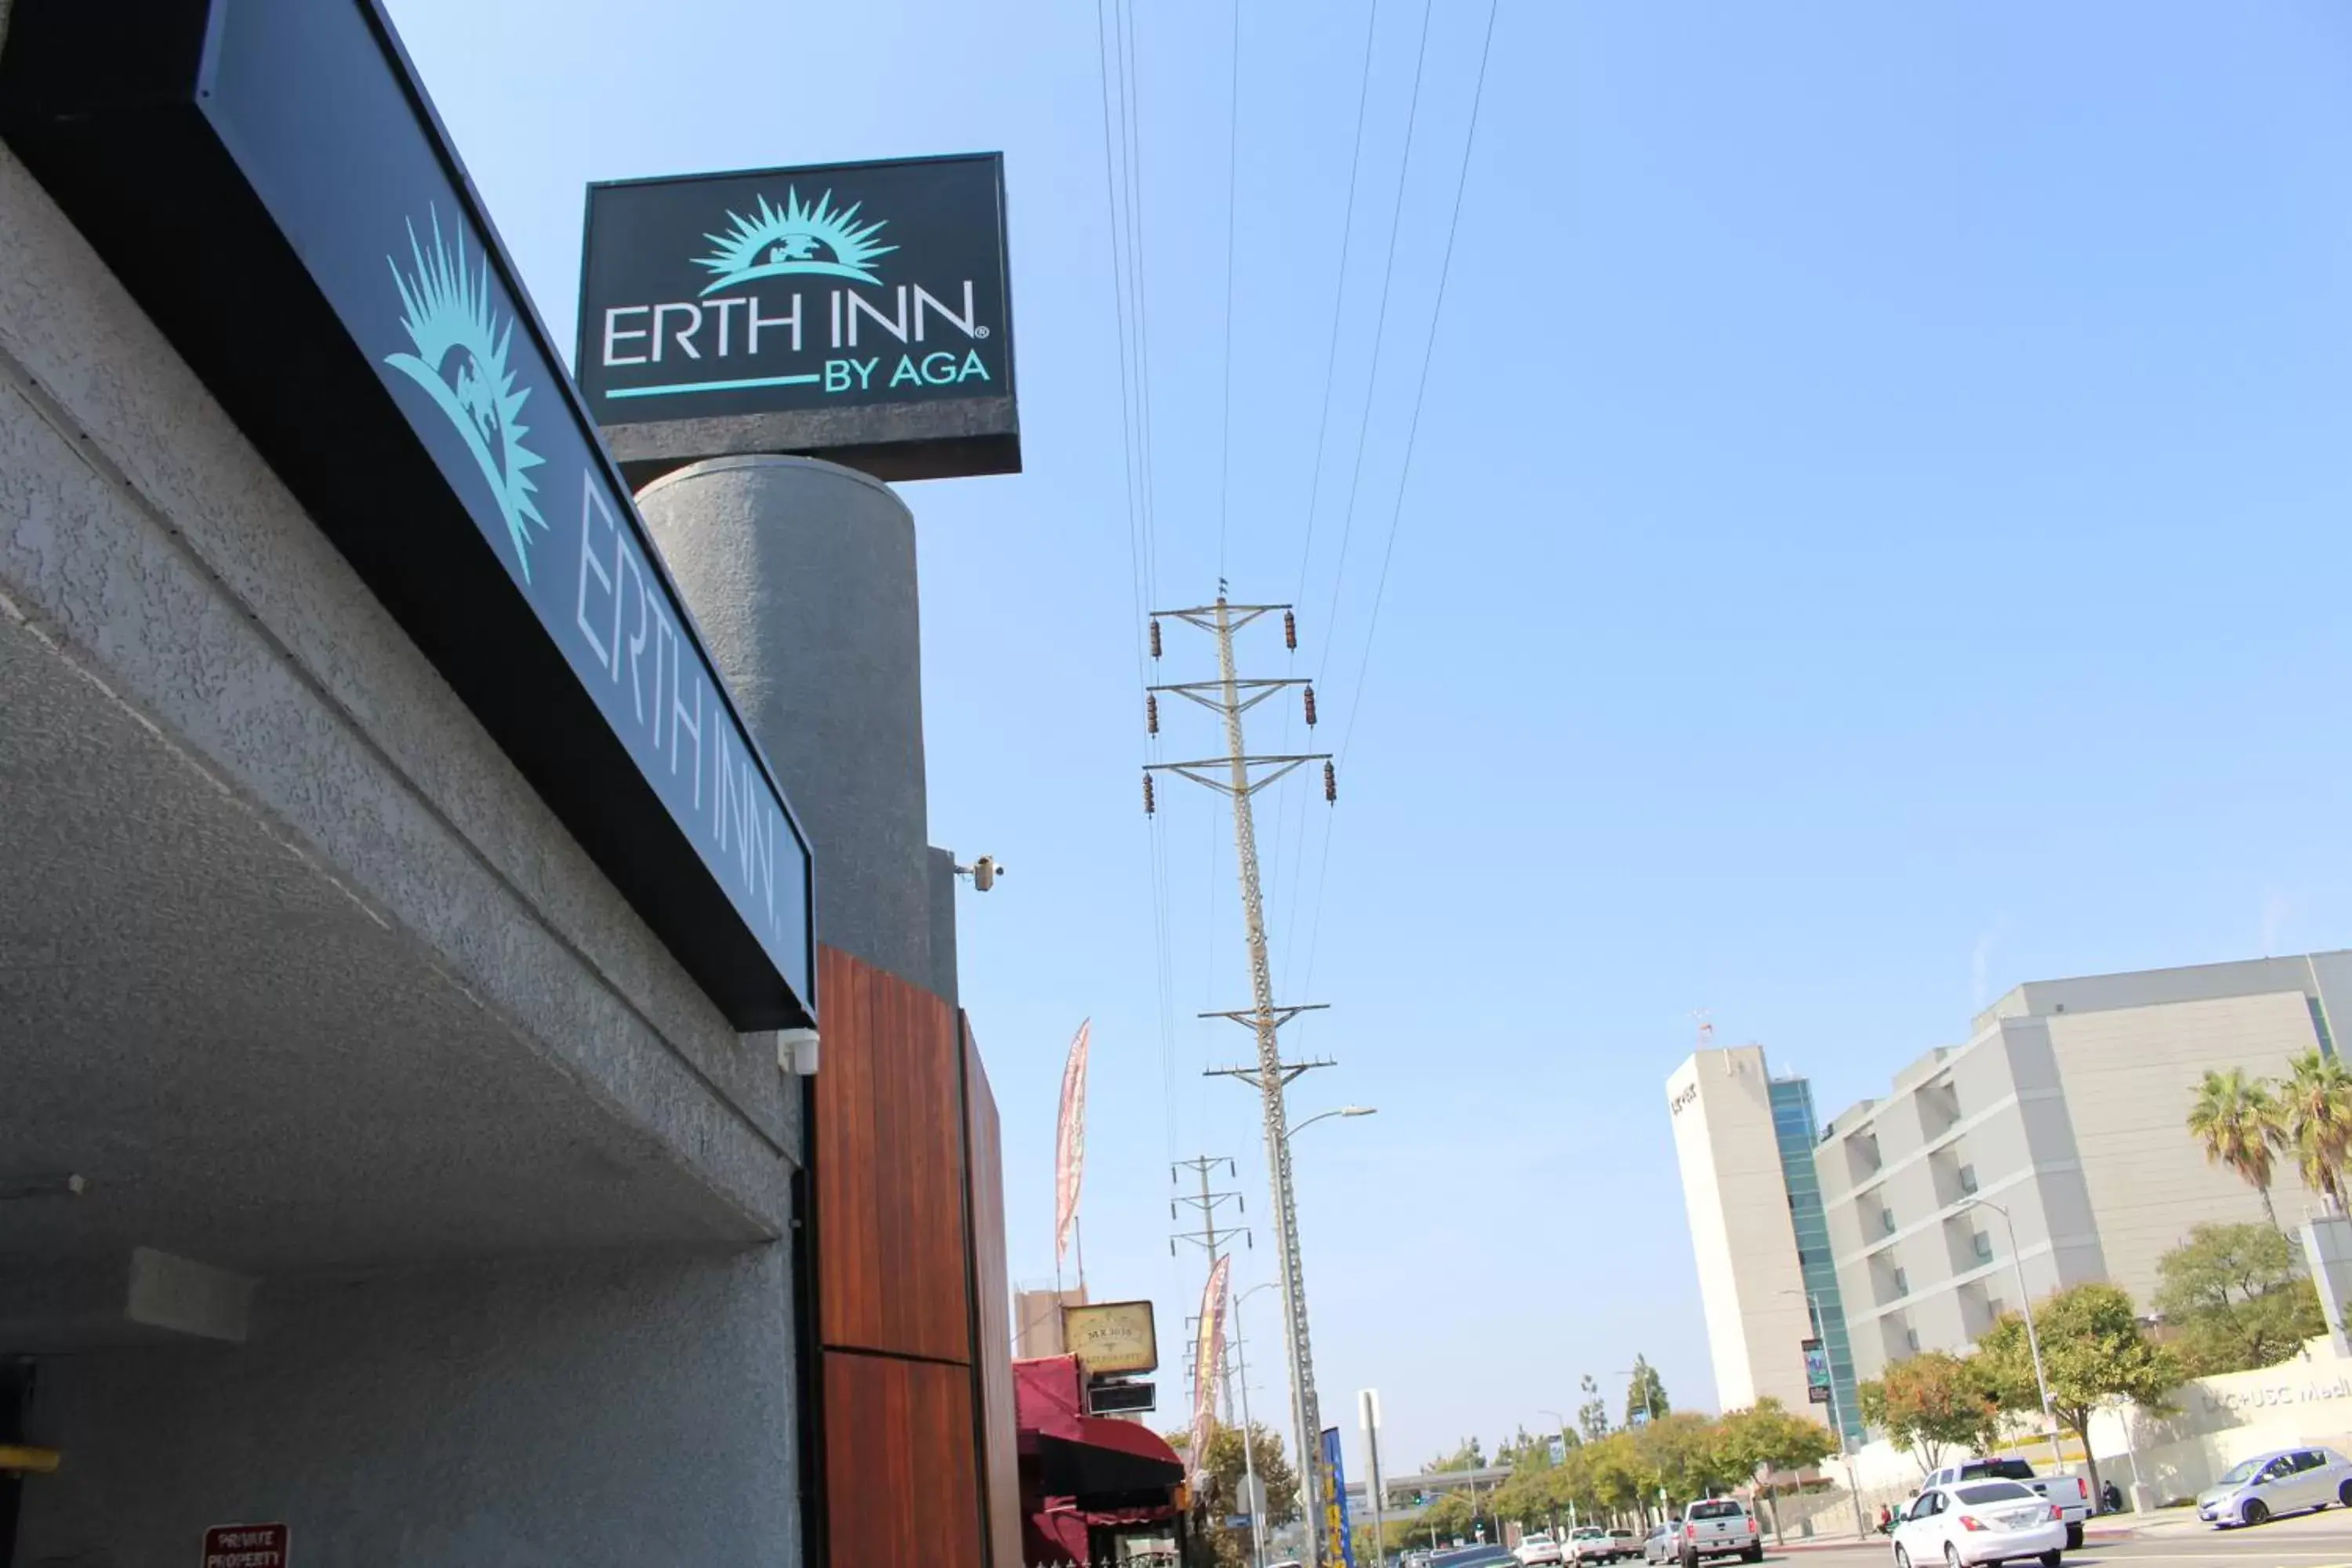 Property building, Facade/Entrance in ERTH INN by AGA Los Angeles